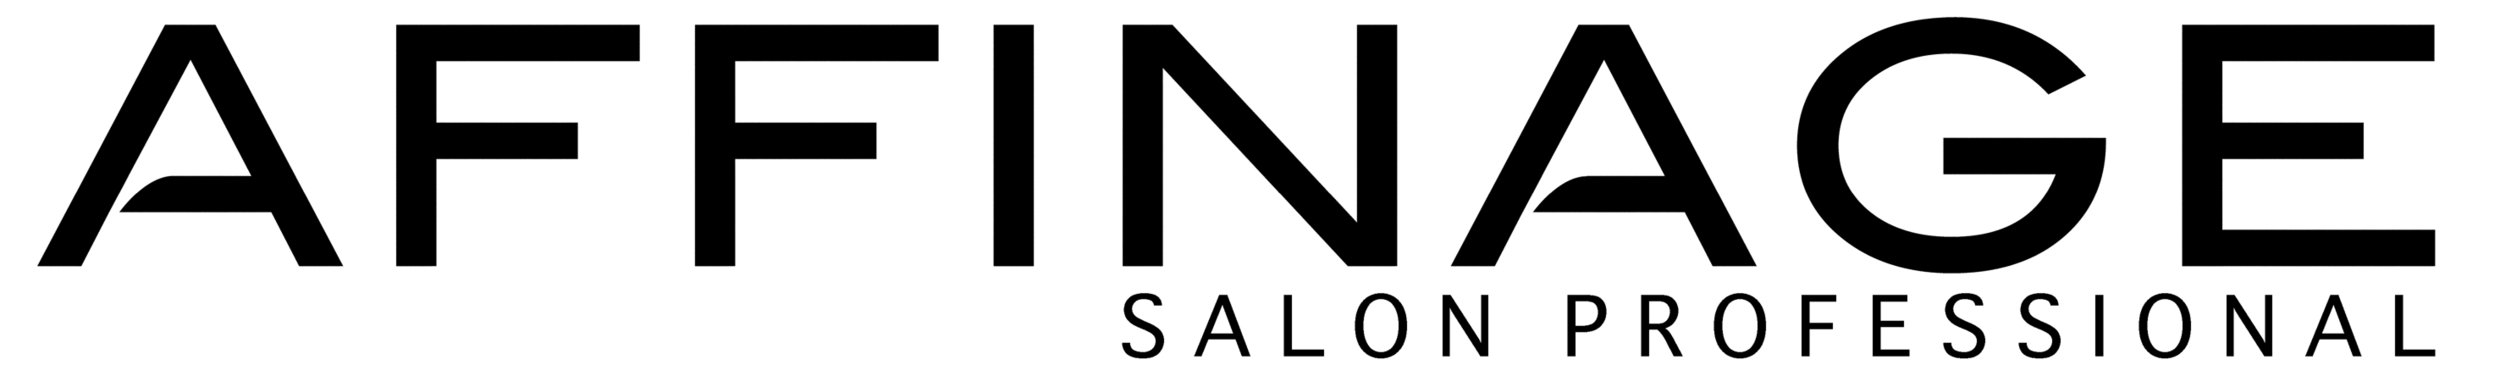 Affinage Salon Professional (Copy)